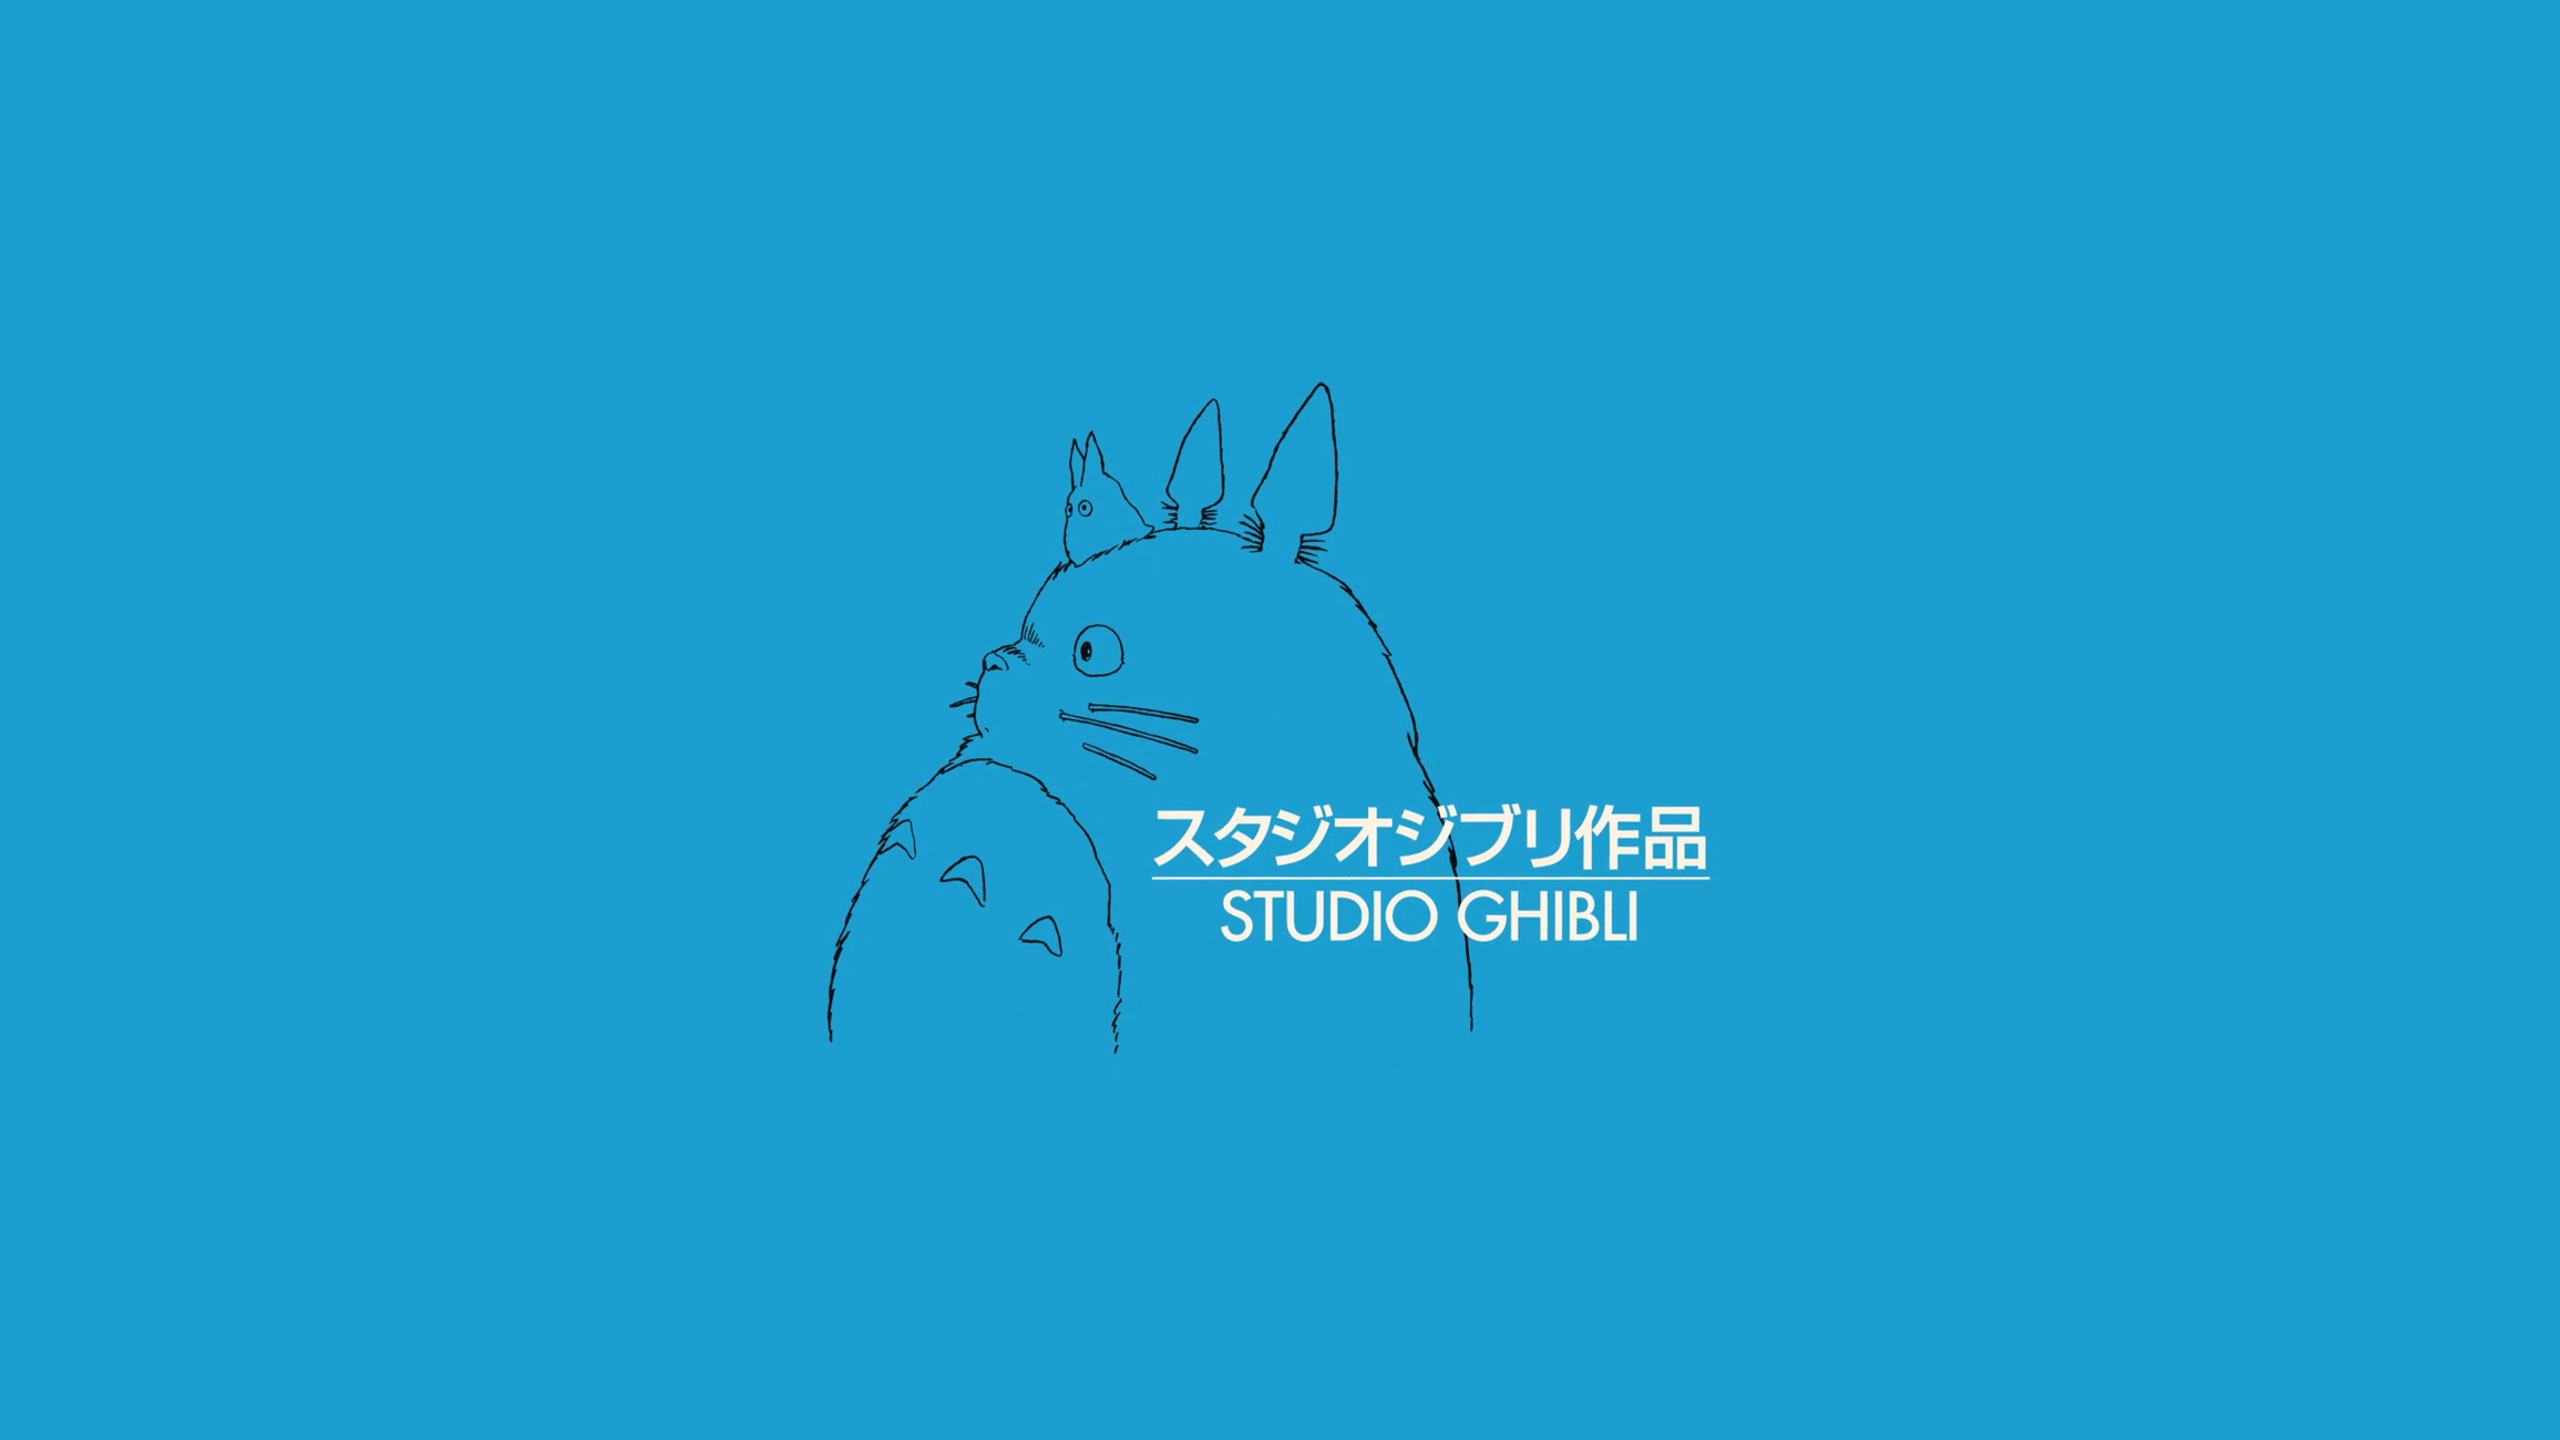 Знак гибли. Студия гибли лого. Studio Ghibli логотип. Студия Дзибли логотип.